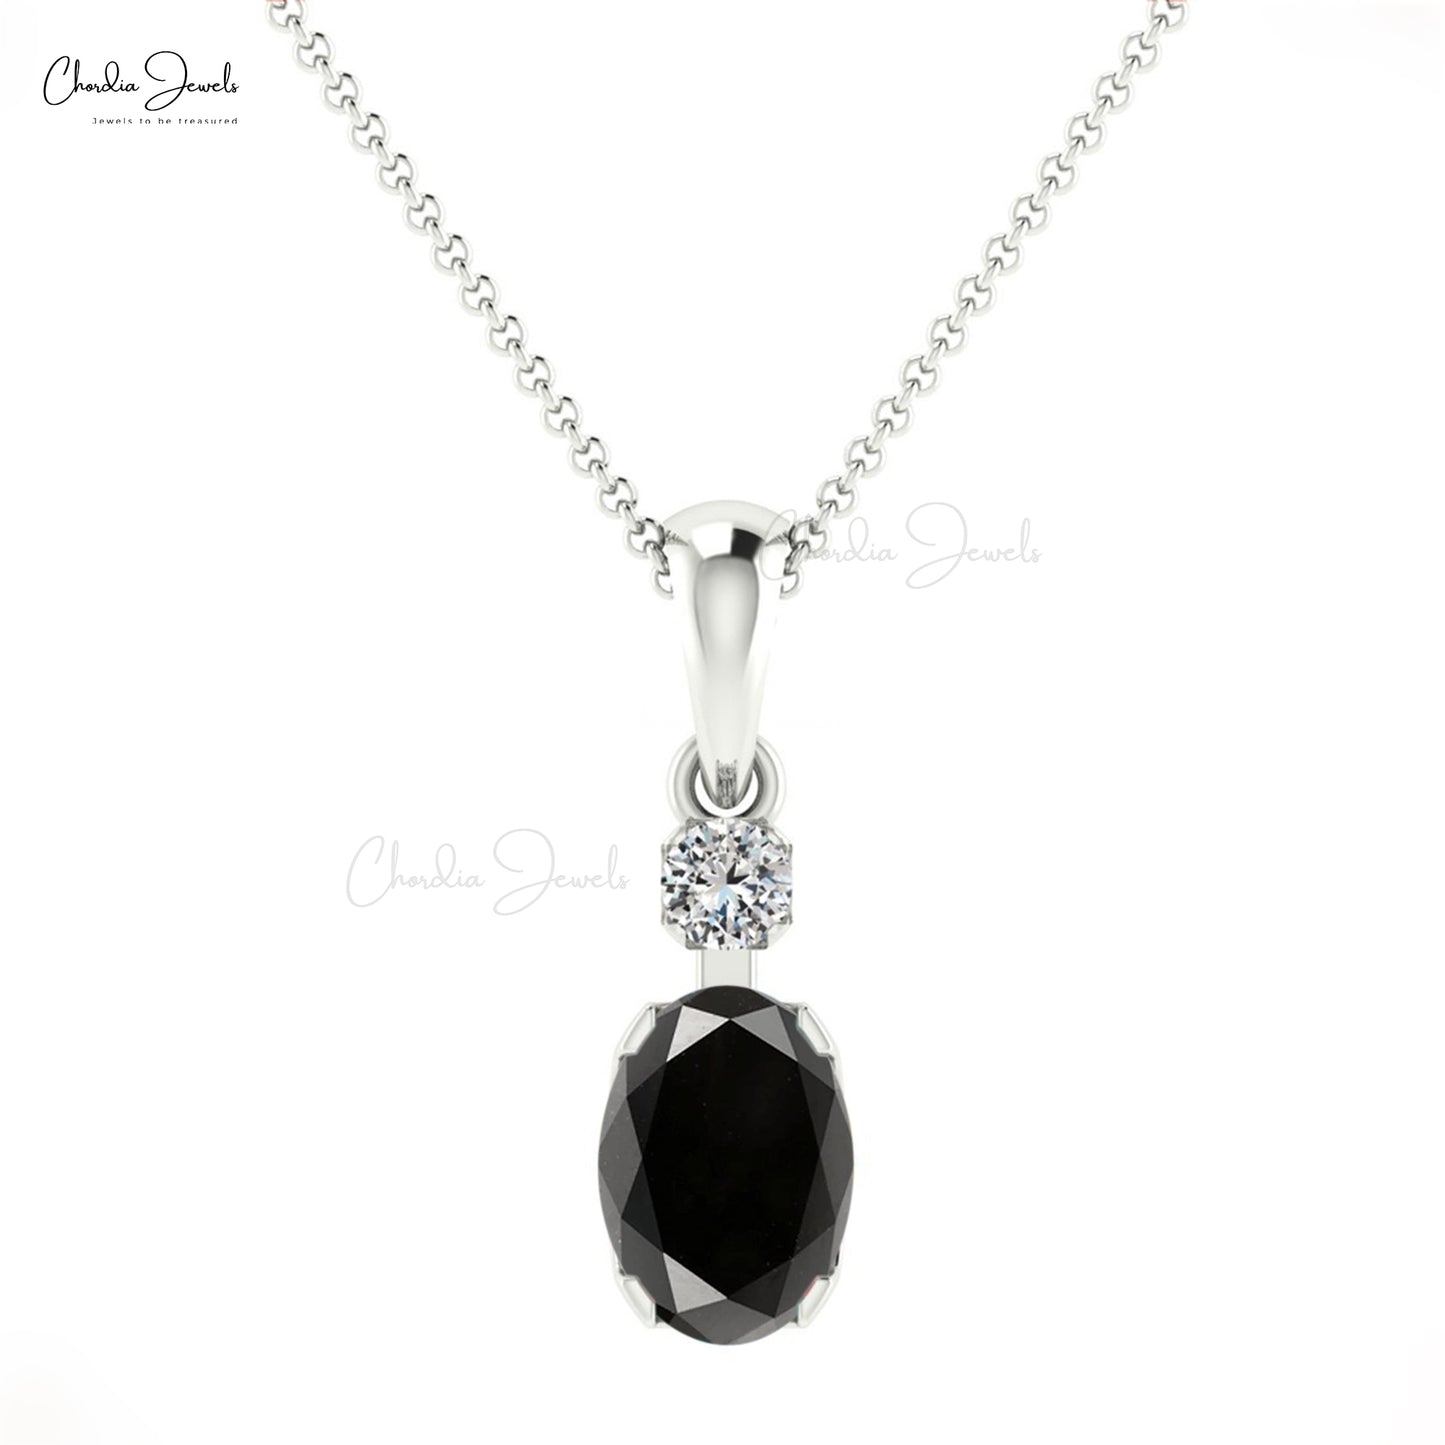 Buy Black Diamond Pendant